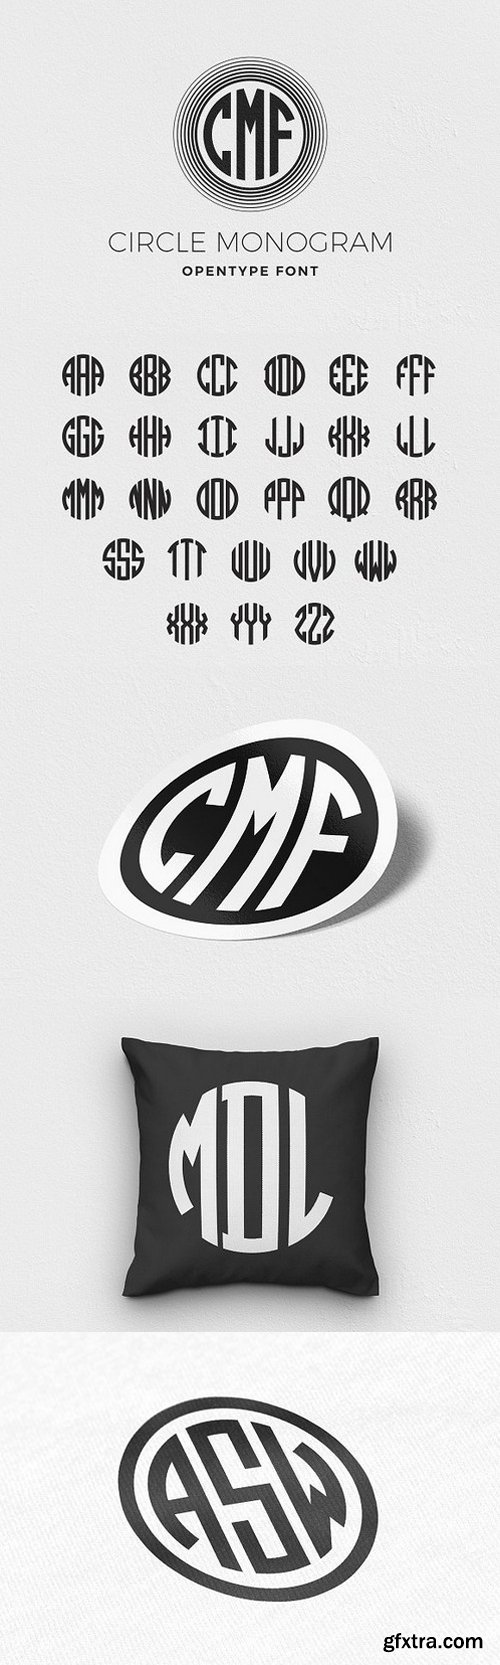 CM - Circle Monogram Font 1594657